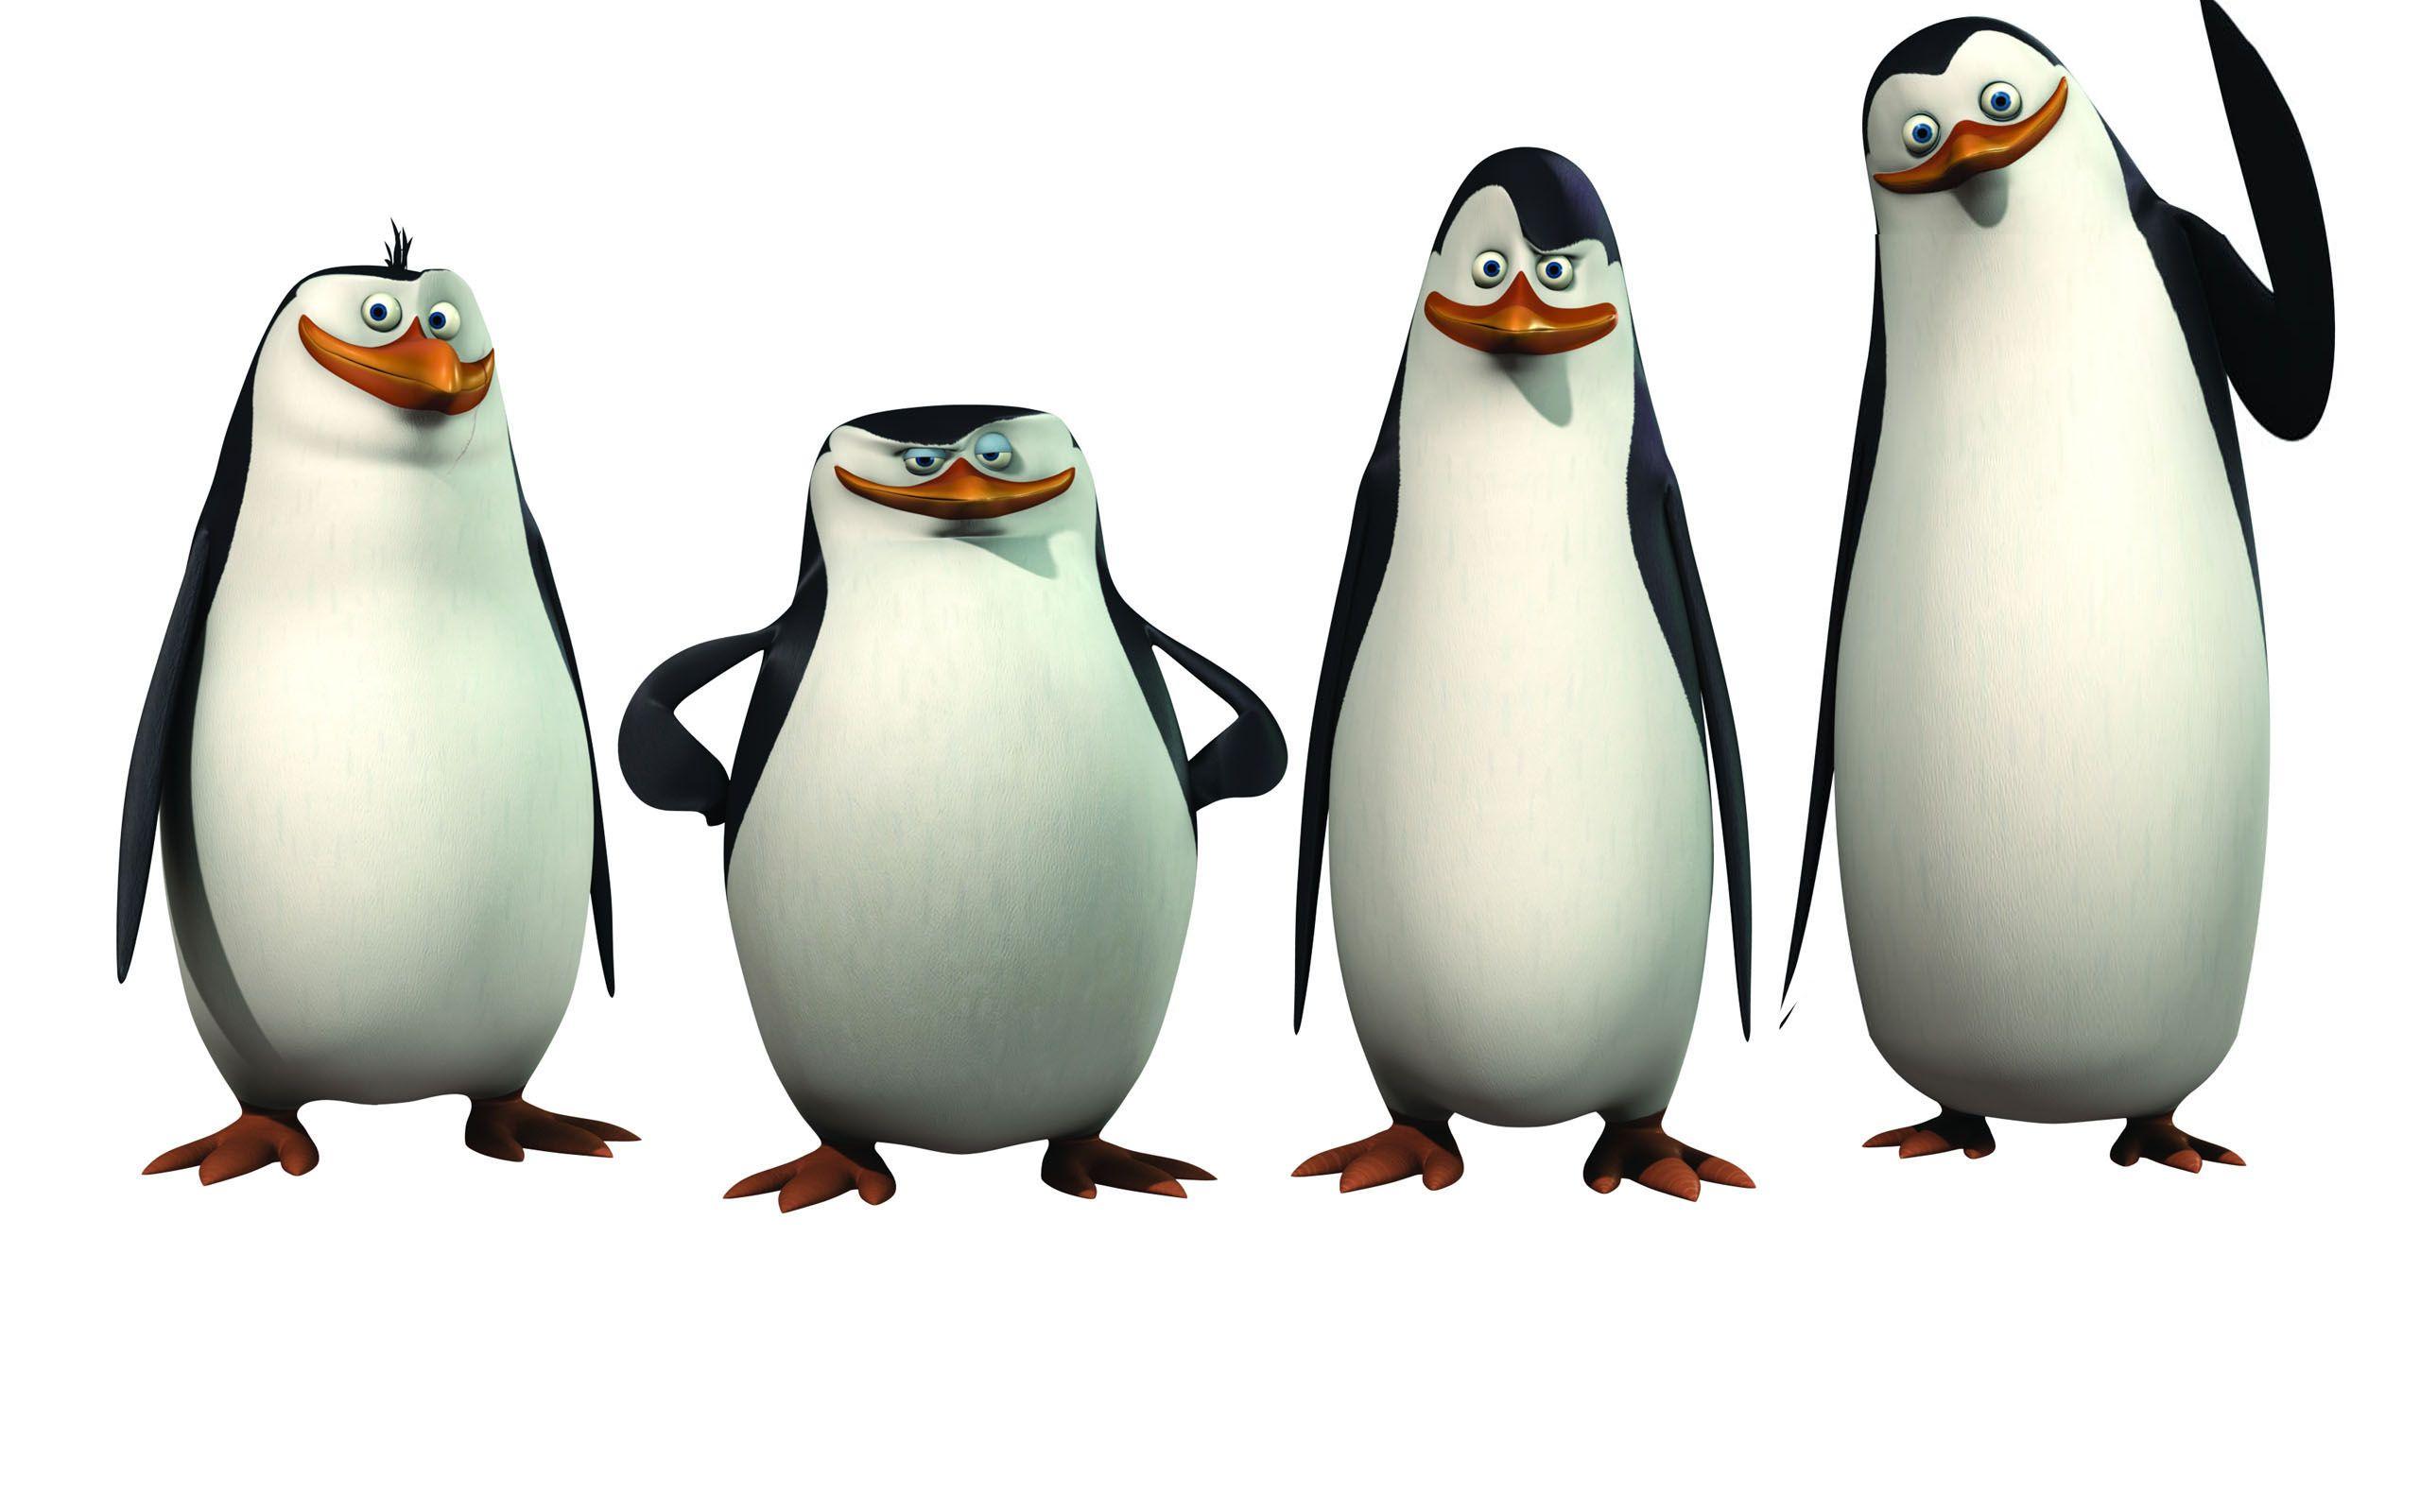 Penguins of Madagascar Privates Growth Spurt Cartoon Wallpaper